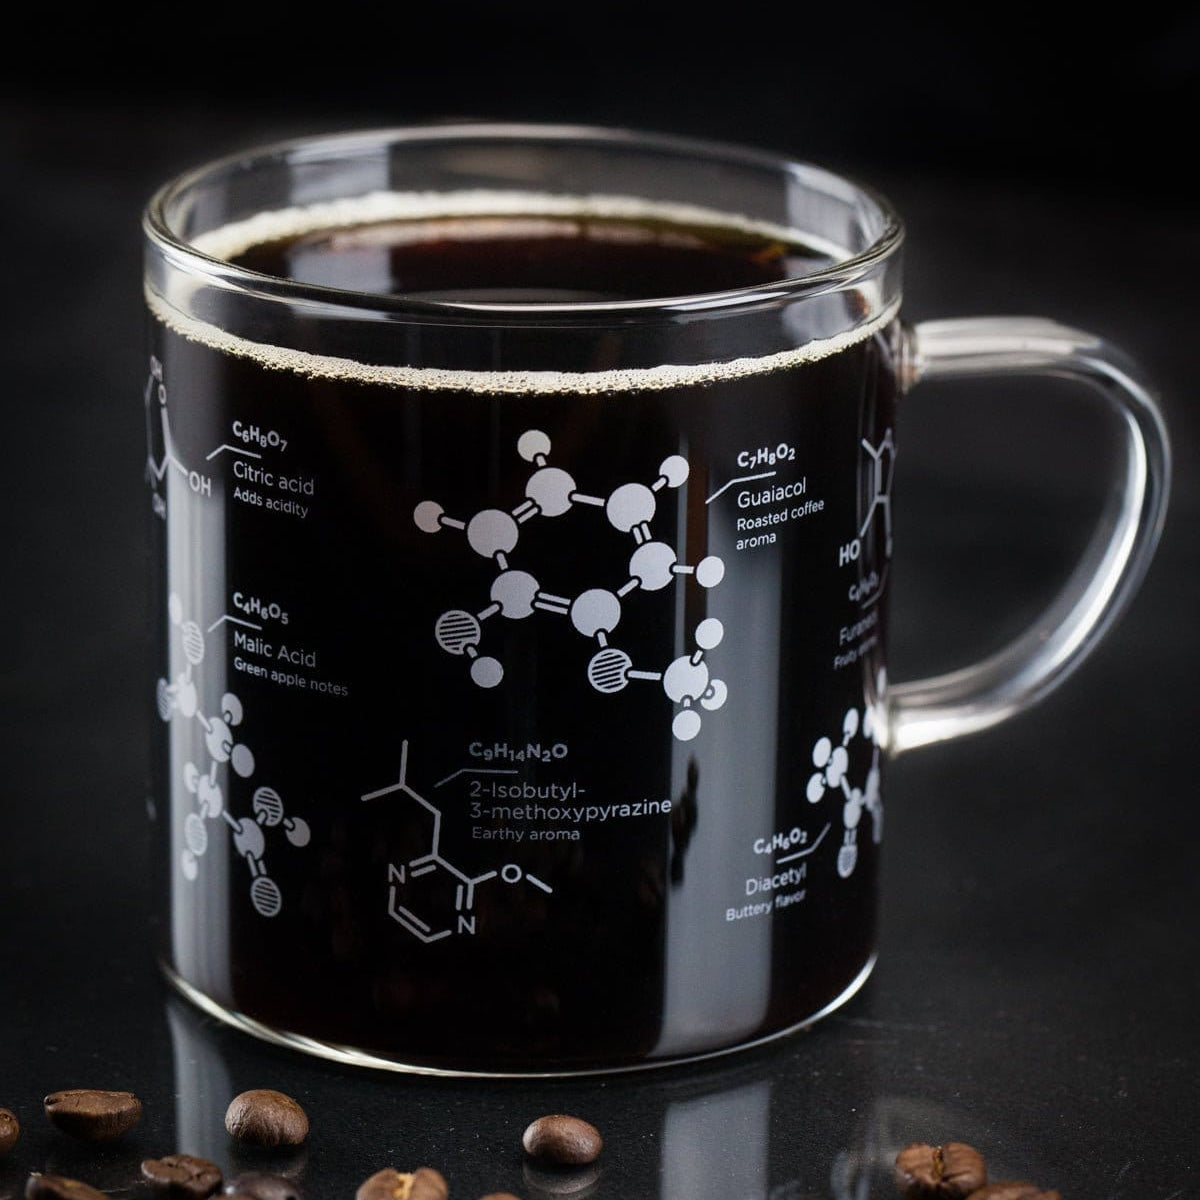 Coffee Chemistry Mug Cognitive Surplus